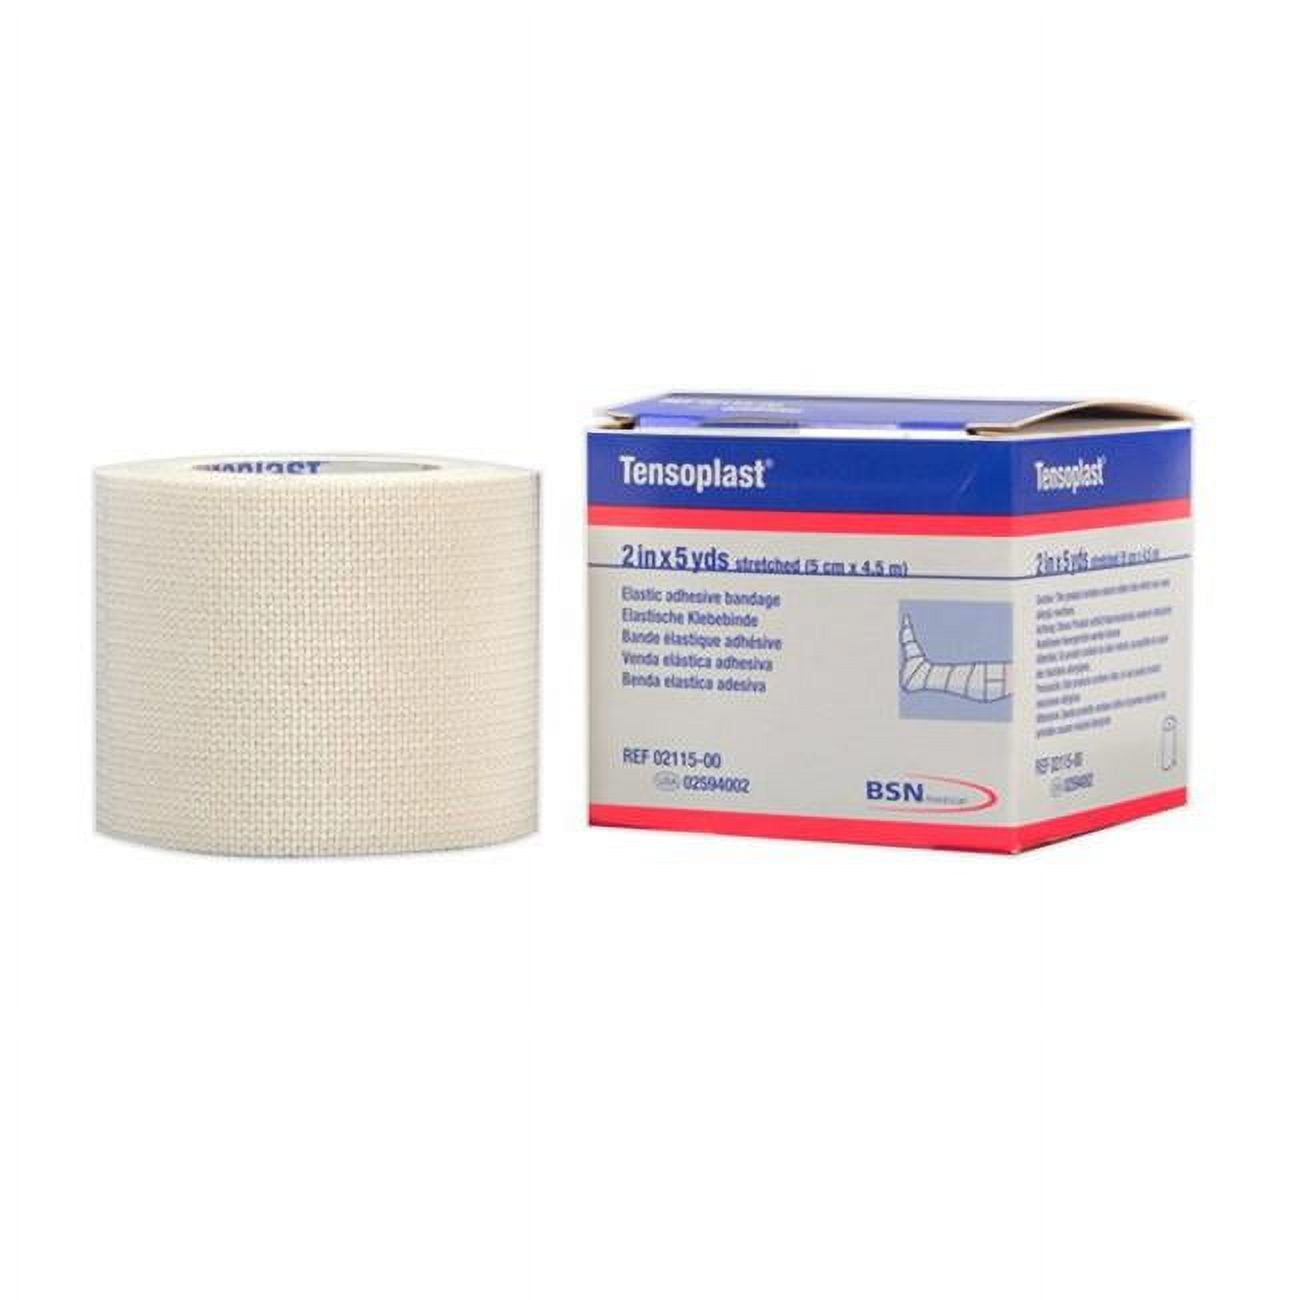 BSN Medical Tensoplast Elastic Adhesive Bandage 7,5cm x 4.5m